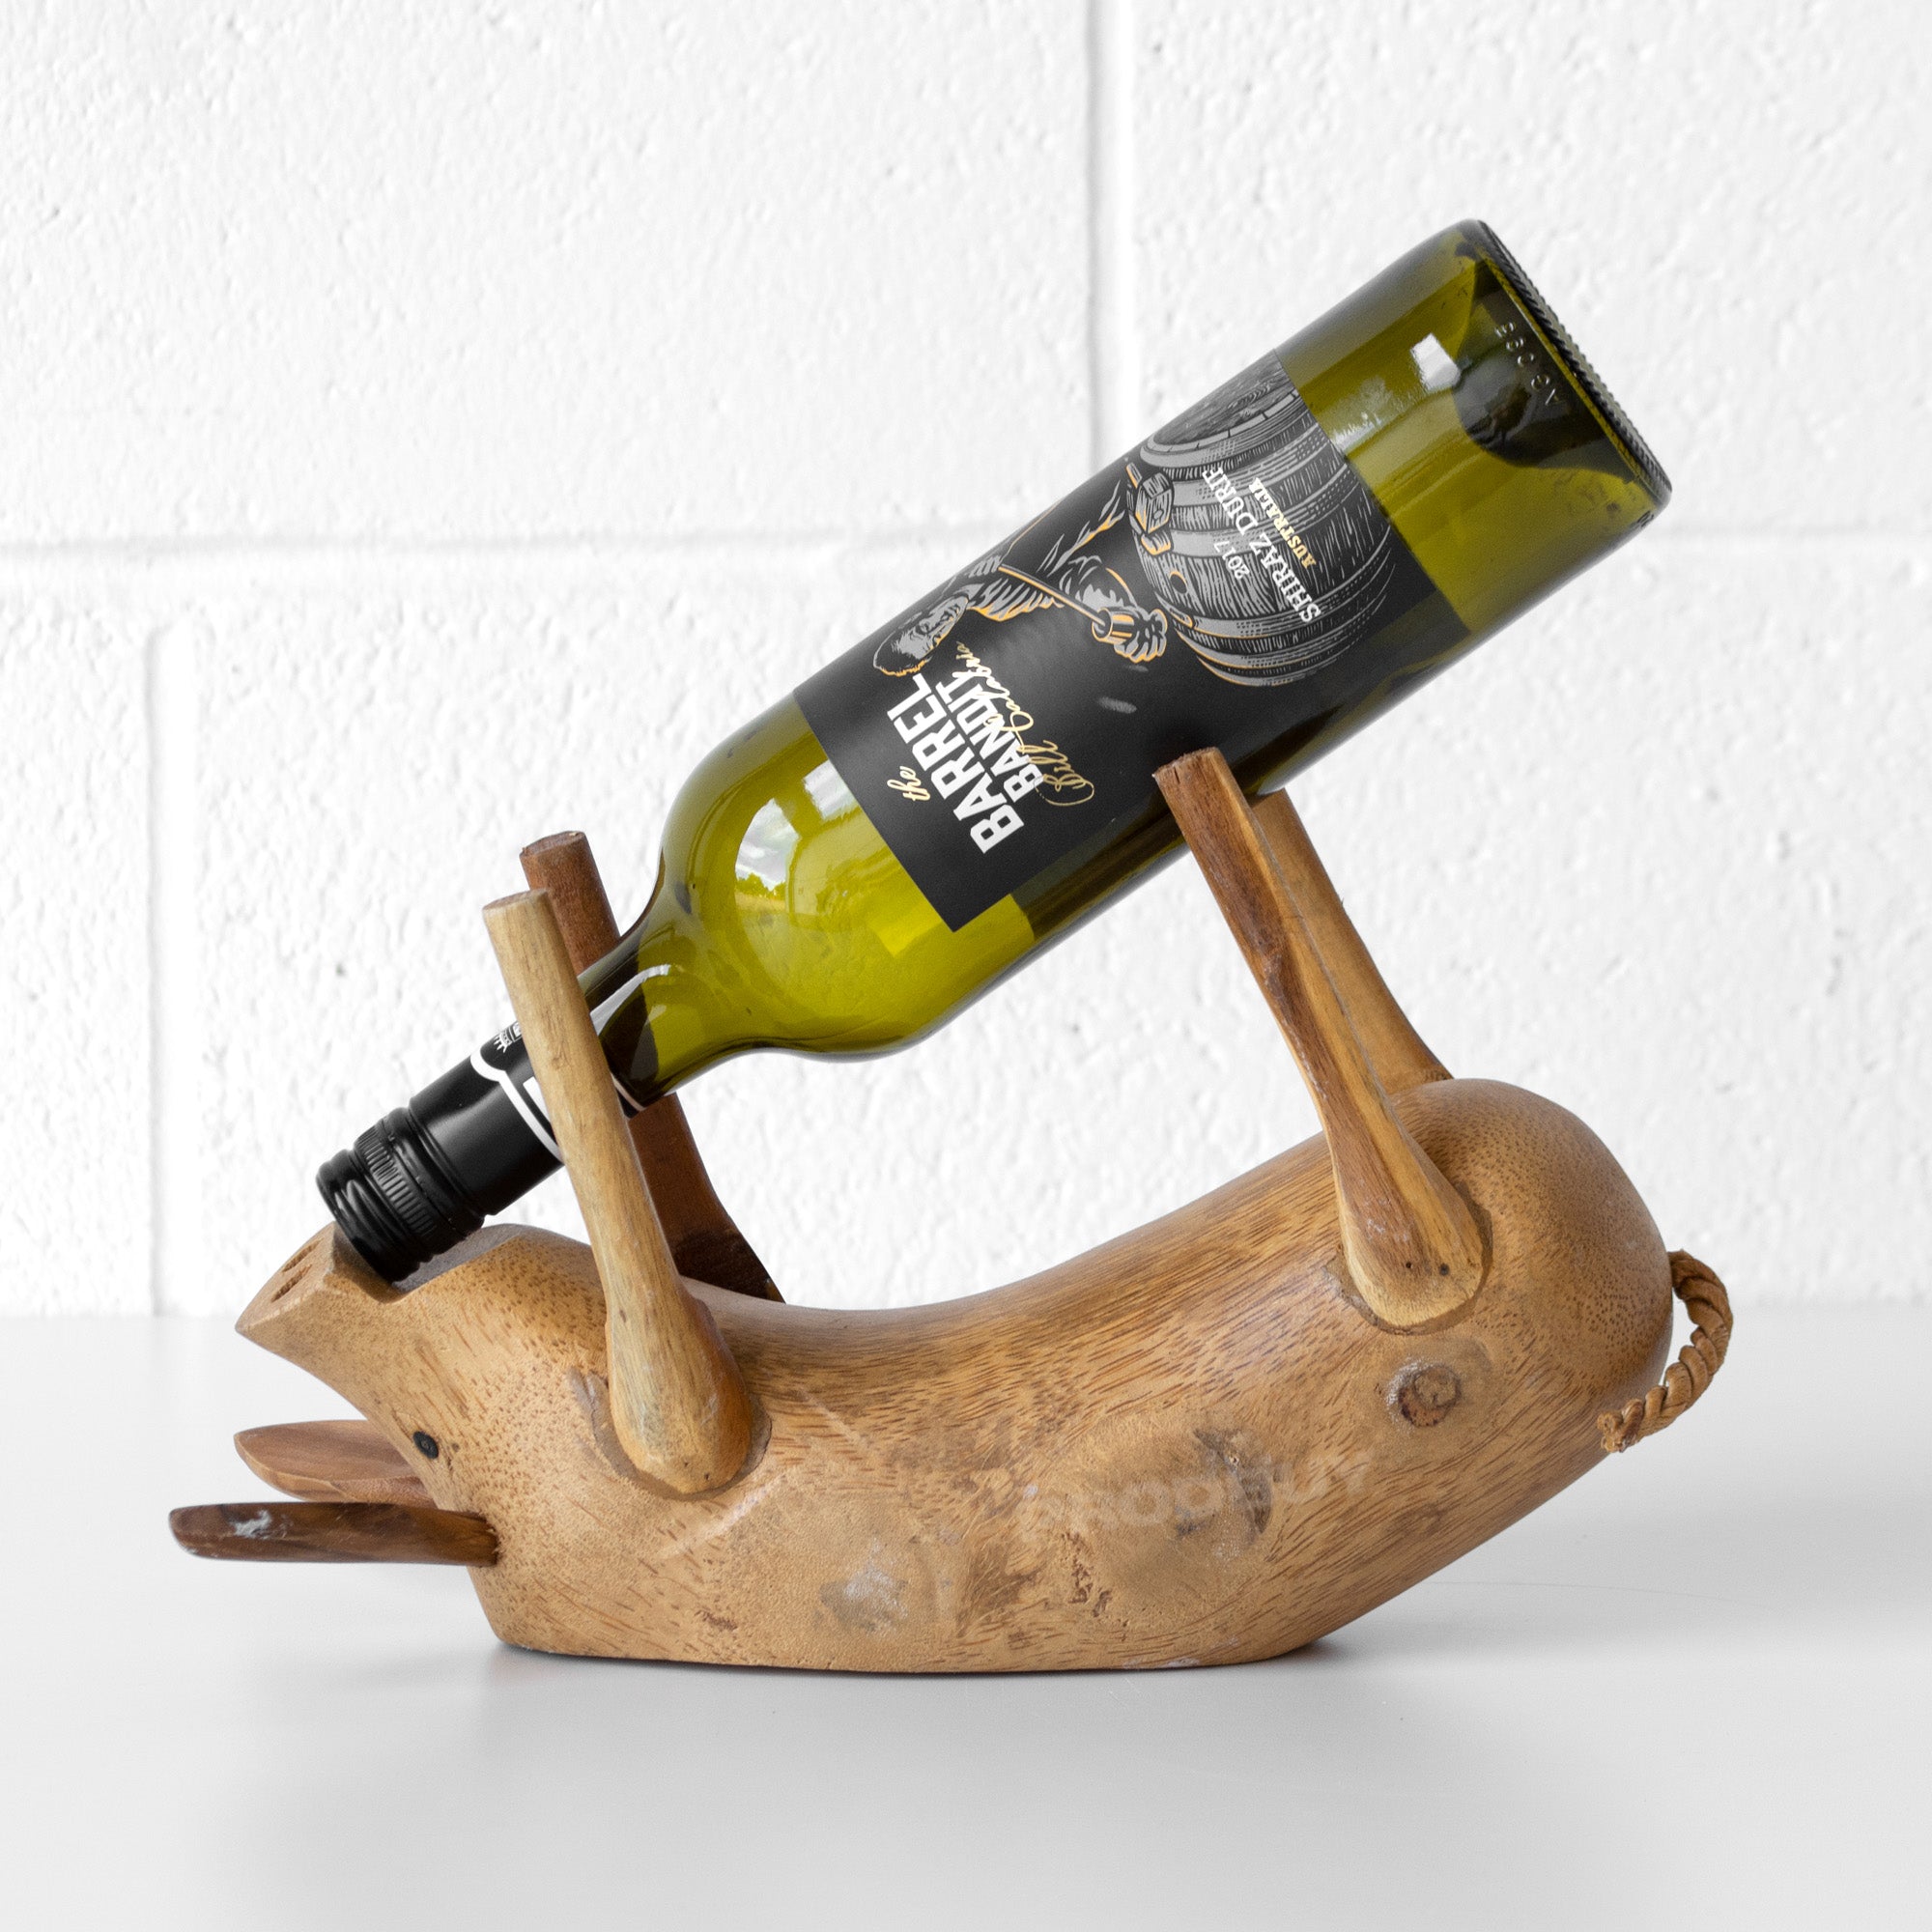 Drunken Pig Wooden Wine Bottle Holder Ornament – Robert David Home